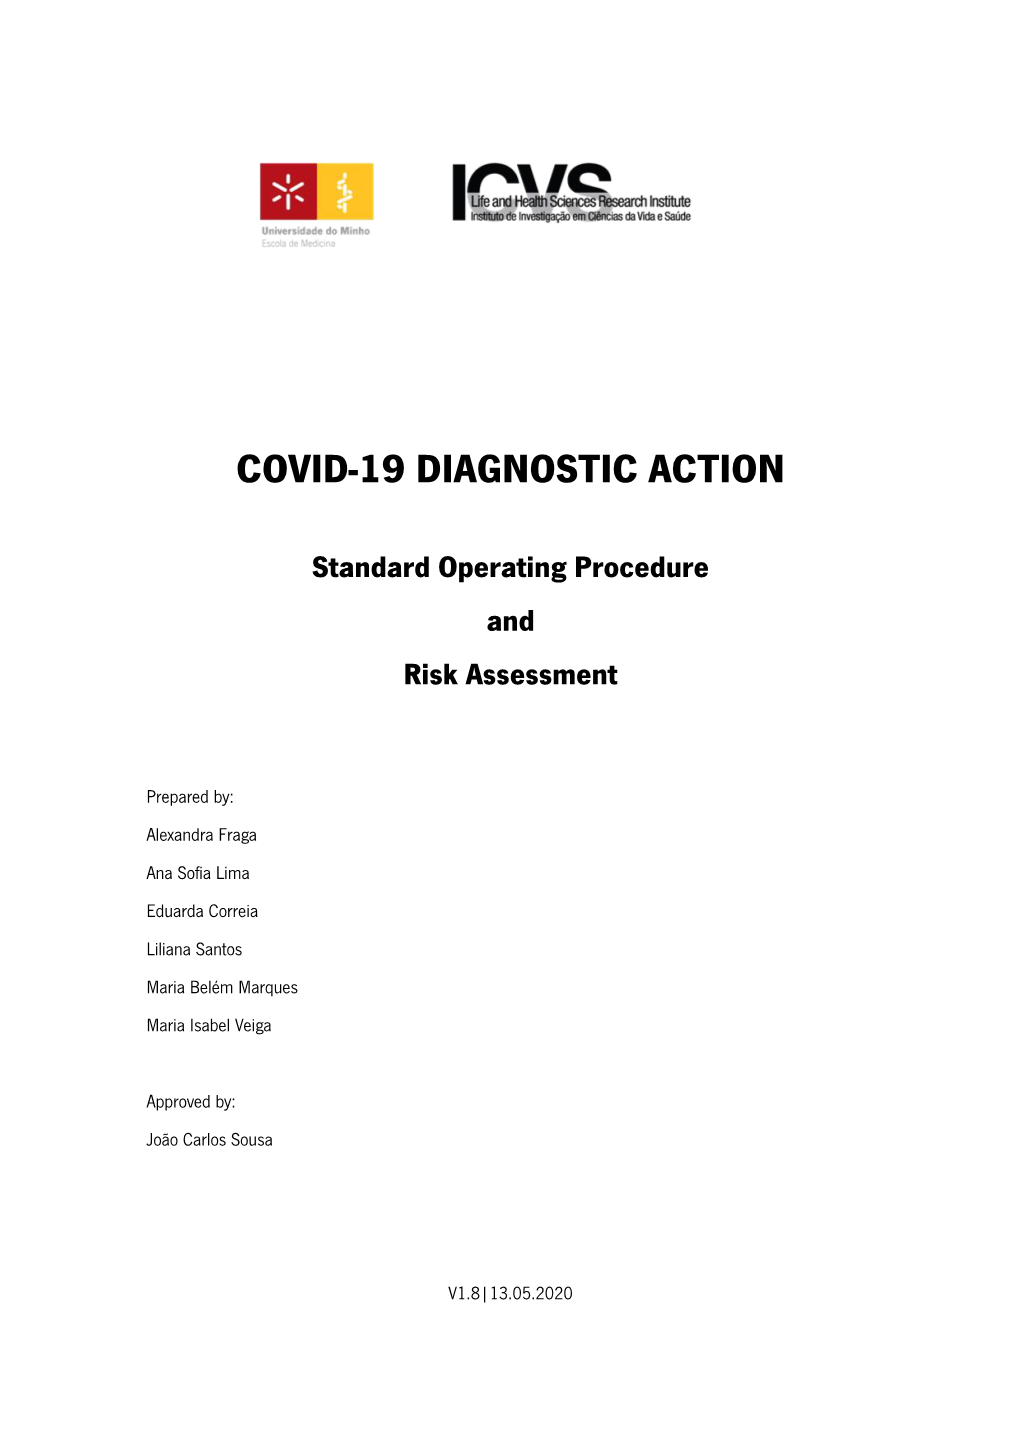 Covid-19 Diagnostic Action